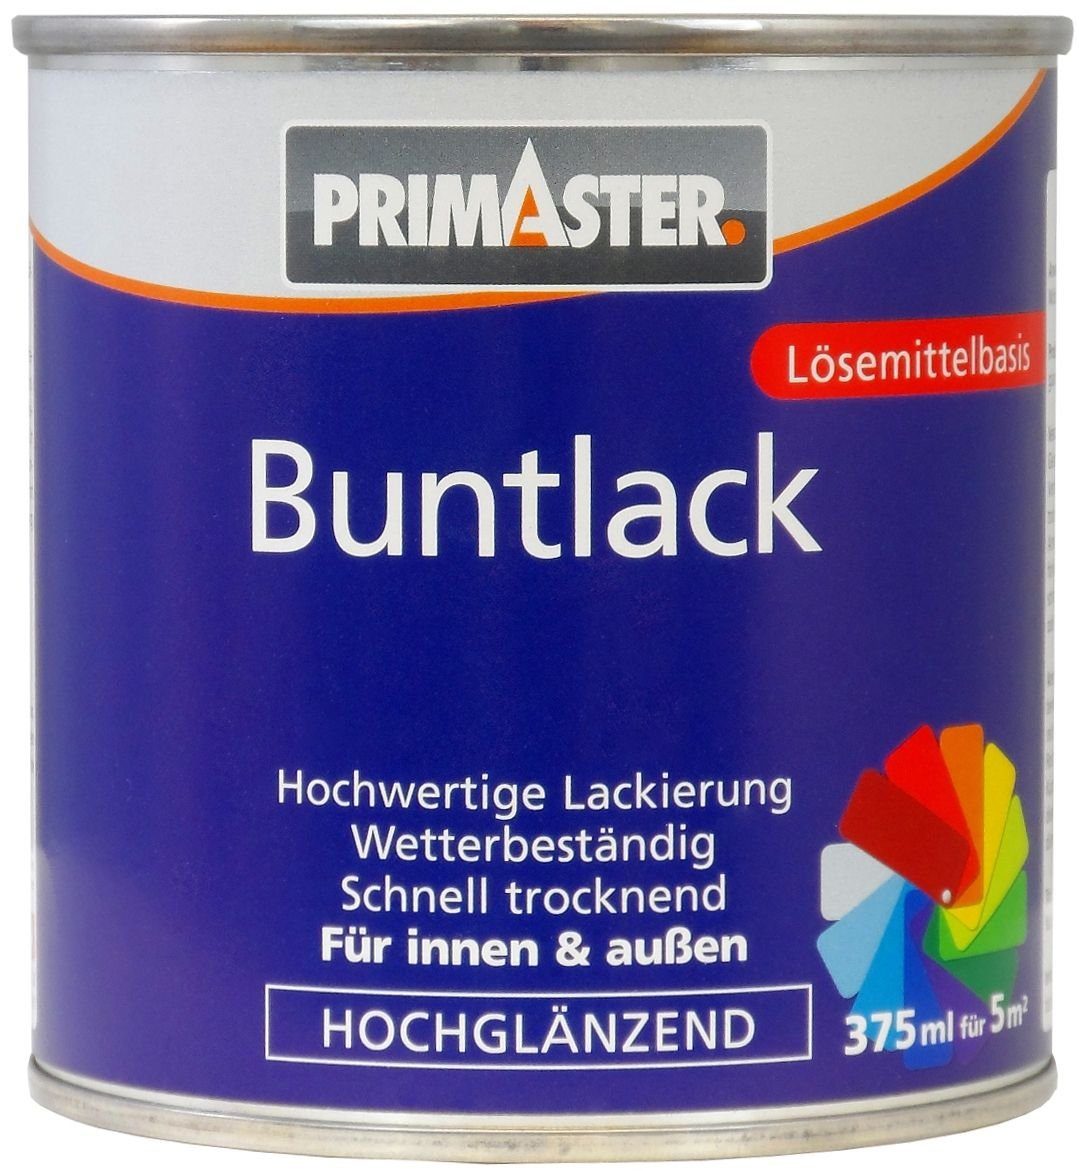 Primaster Acryl-Buntlack Primaster 3000 Buntlack feuerrot RAL 375 ml